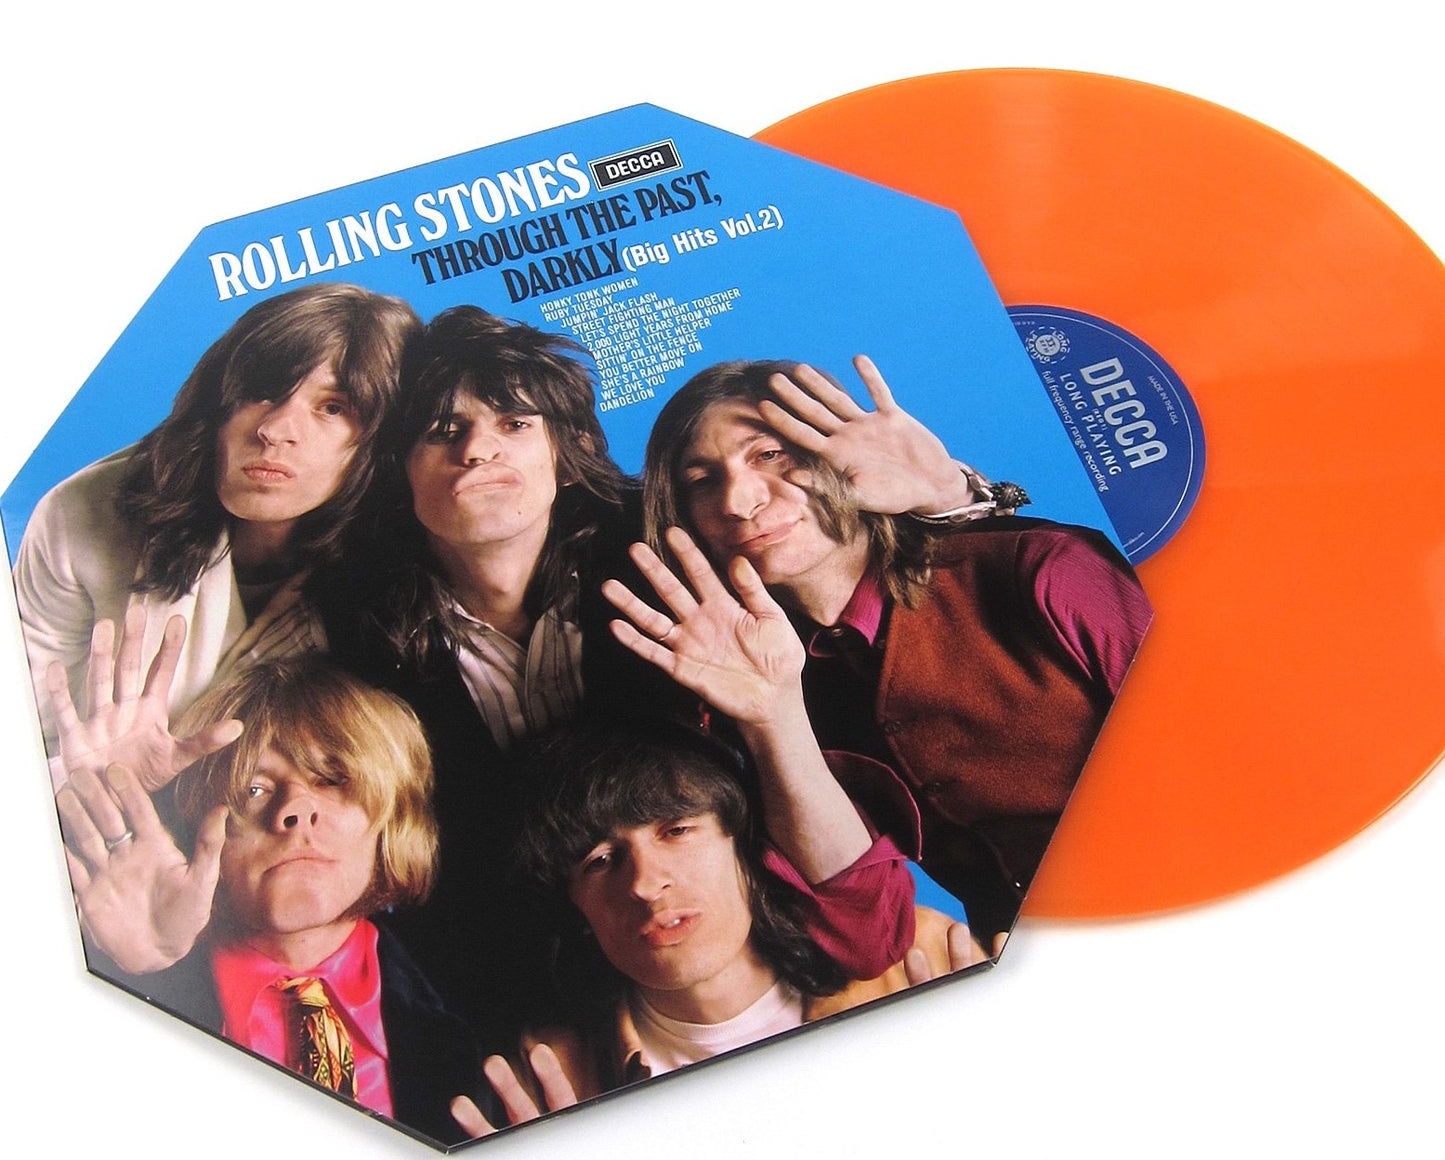 NEW - Rolling Stones (The), Through the Past Darkly Ltd Ed Orange LP